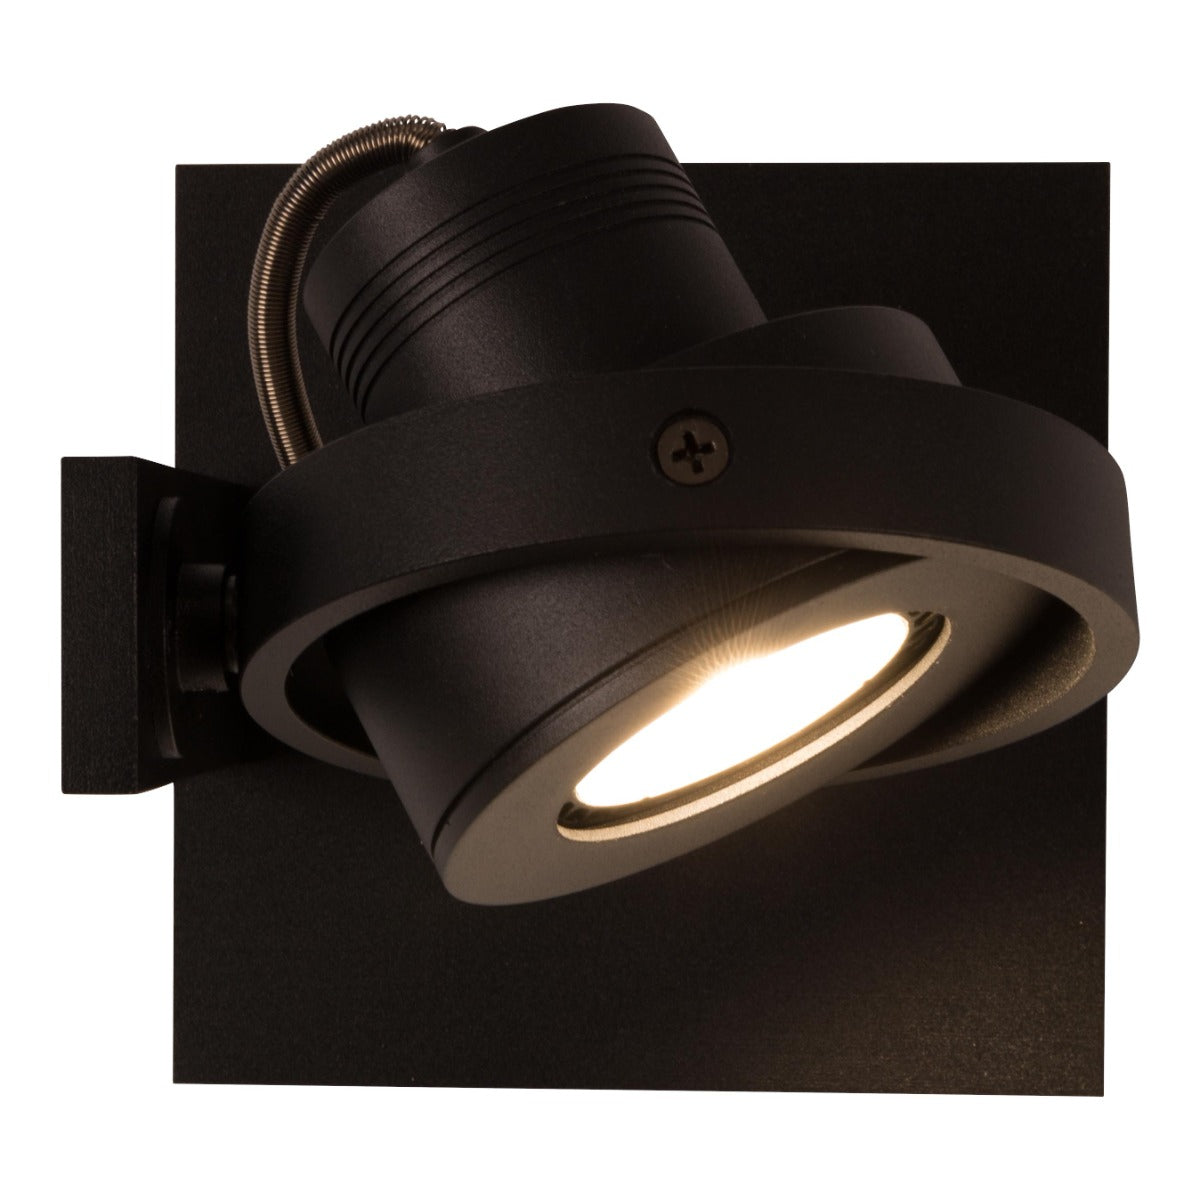 LUCI-1 DTW spot lamp black, Zuiver, Eye on Design